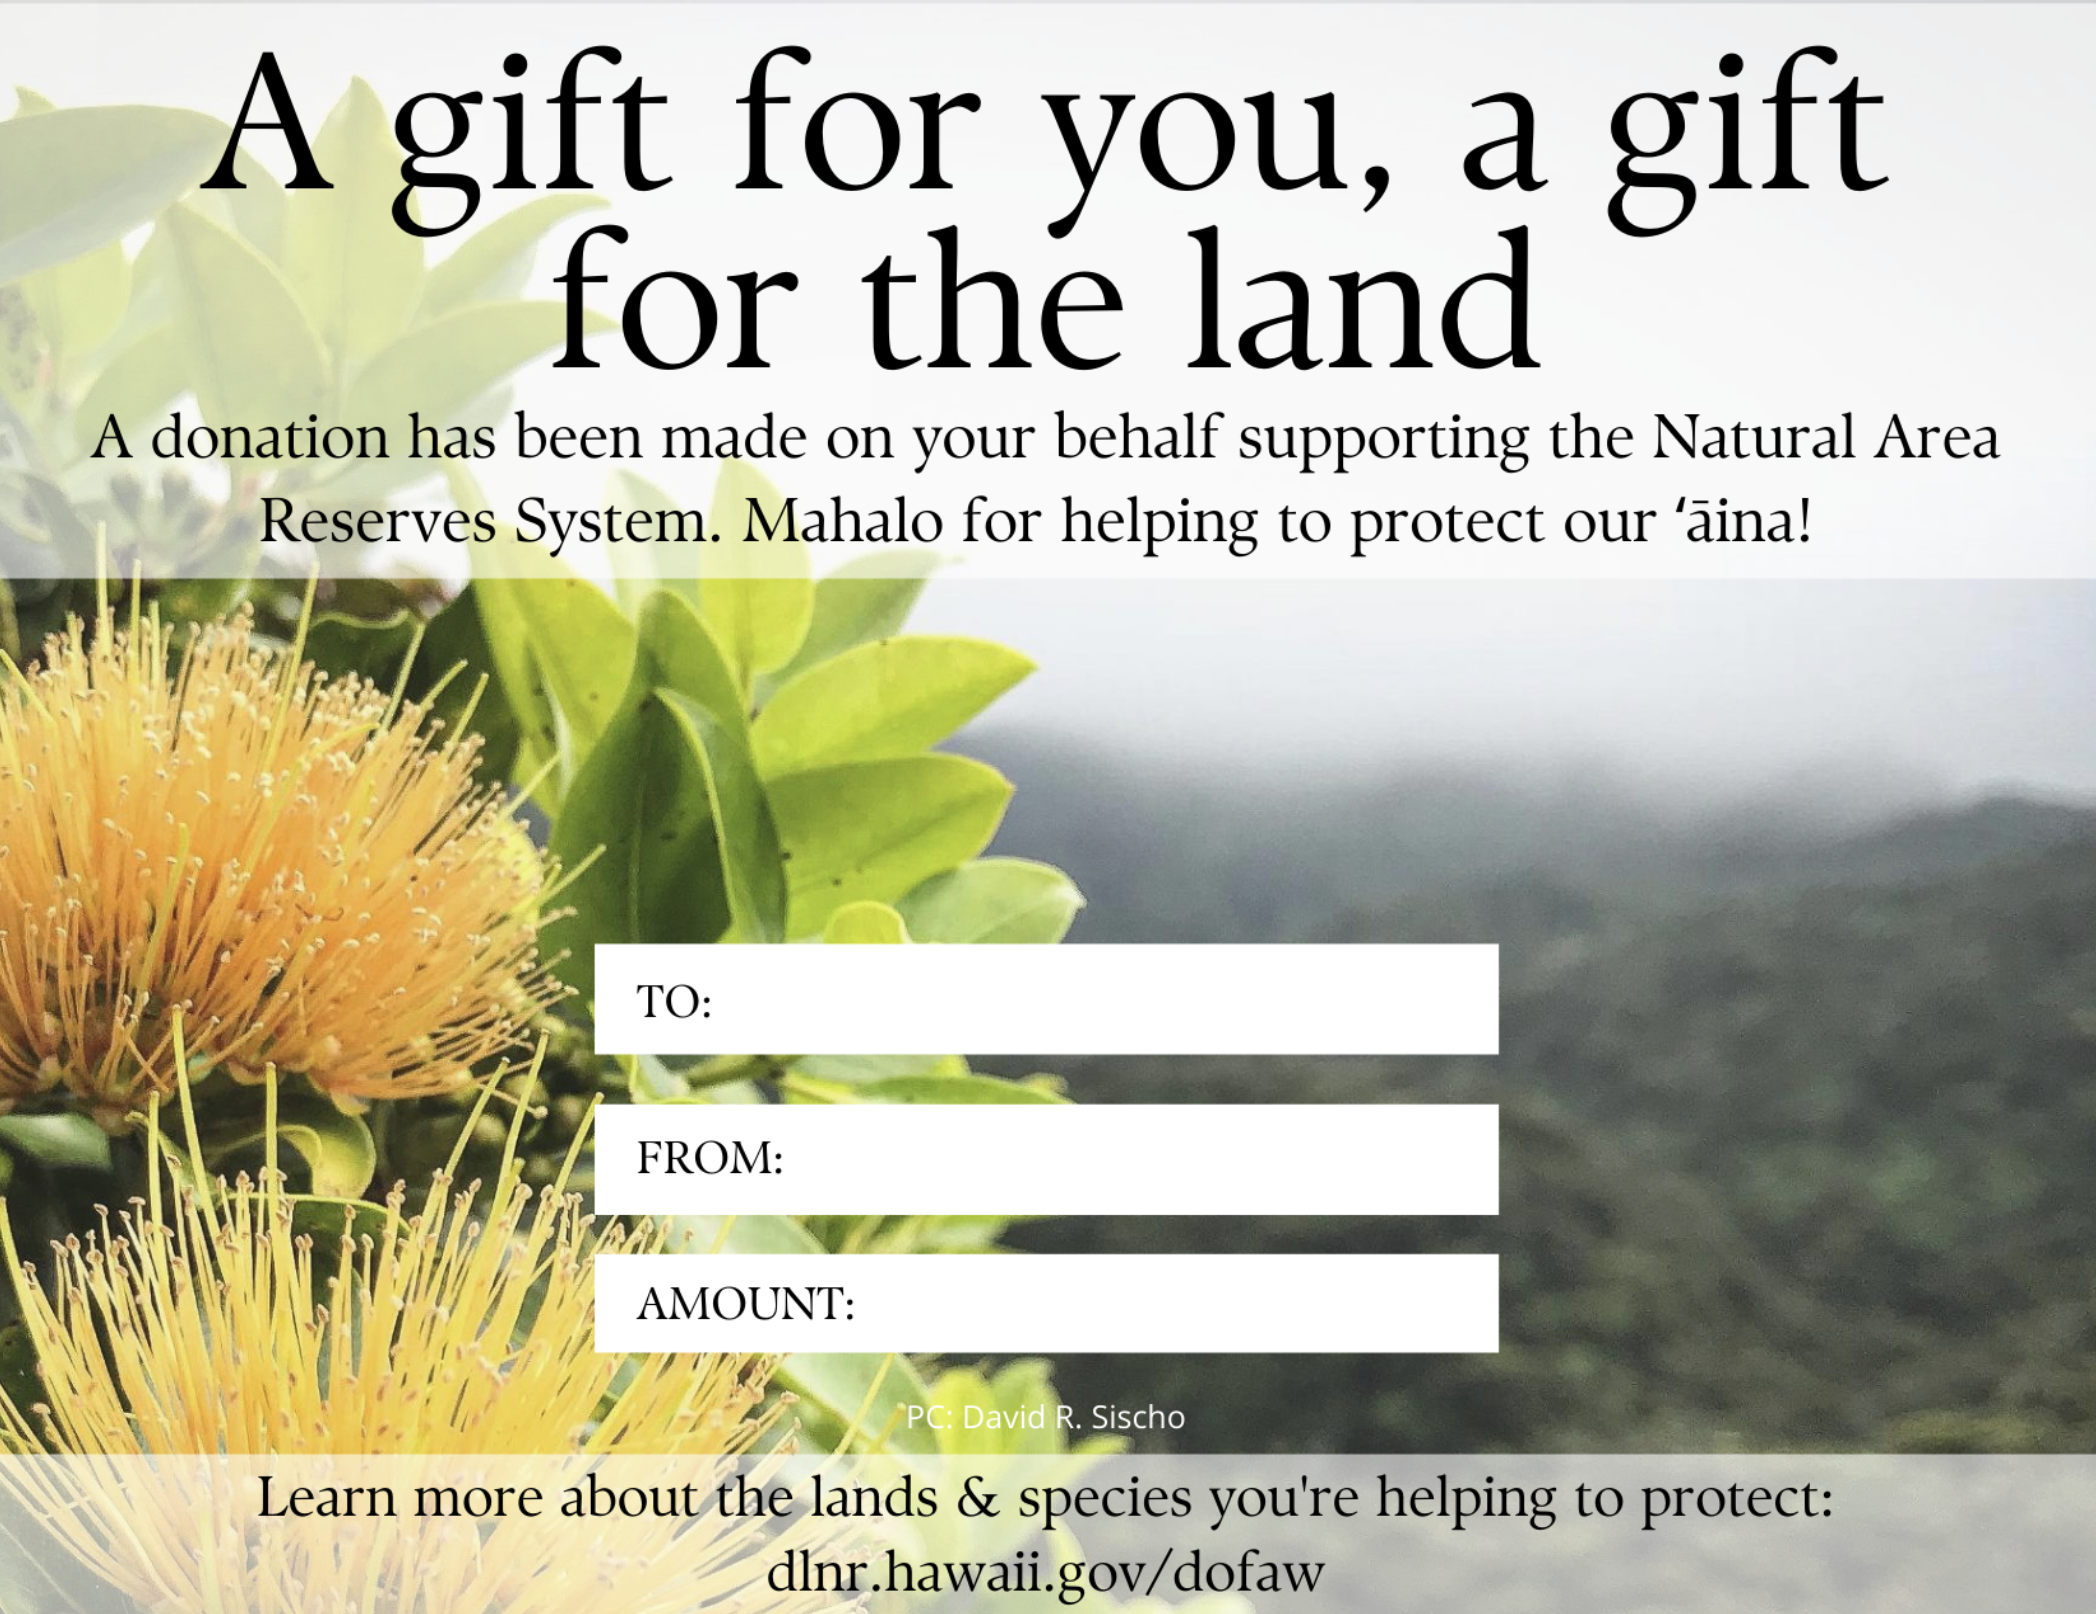 An image of a donation gift card featuring lehua mamo